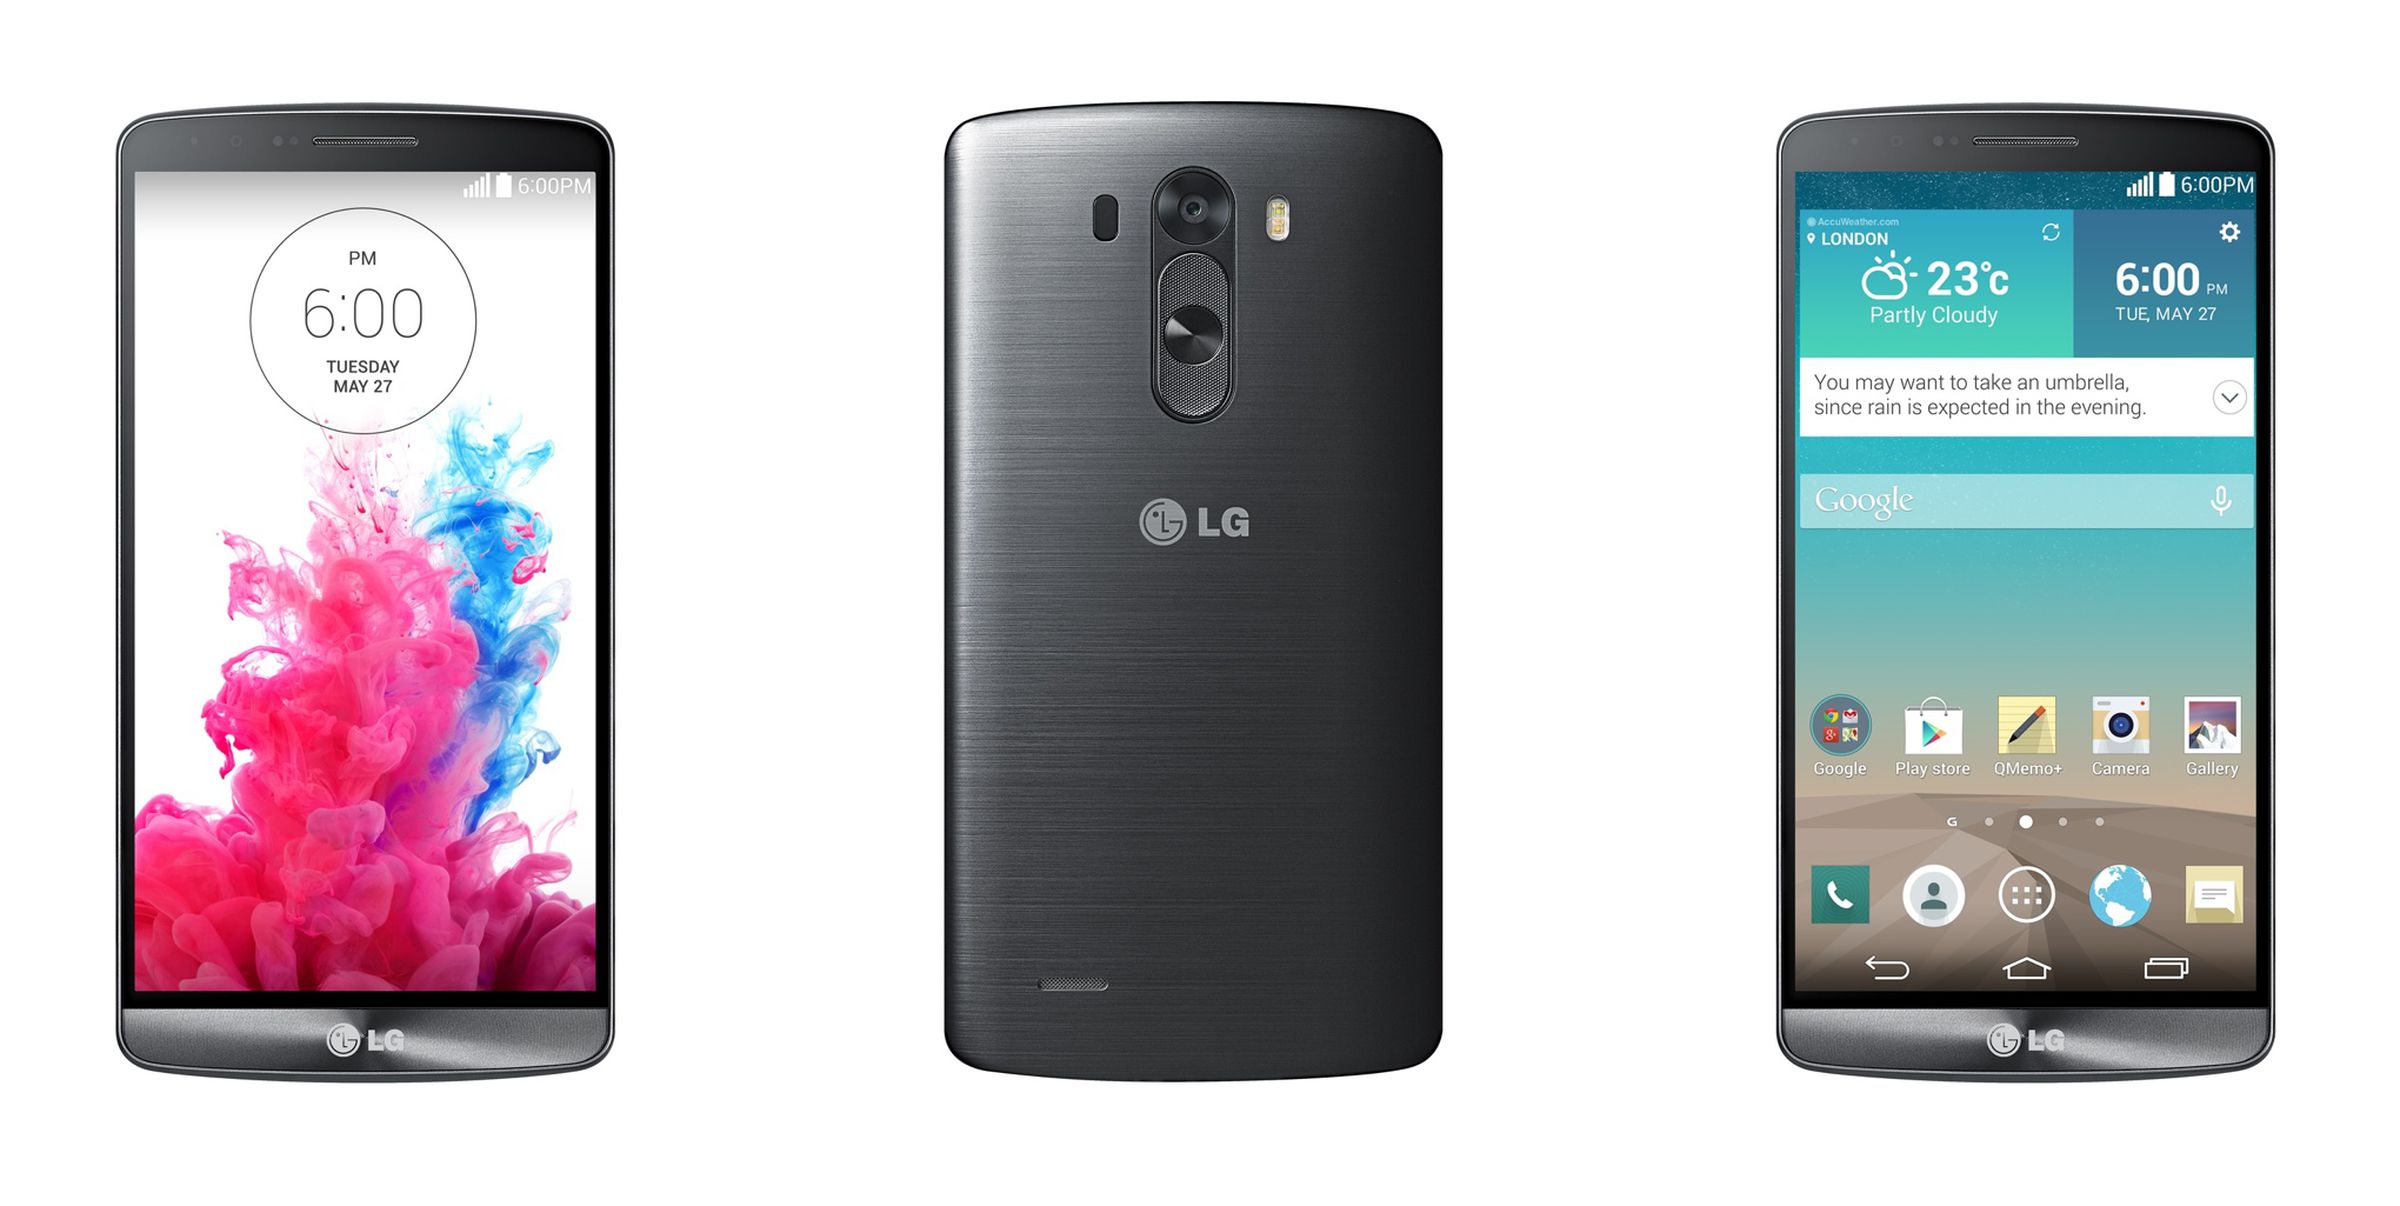 LG G3 official photos